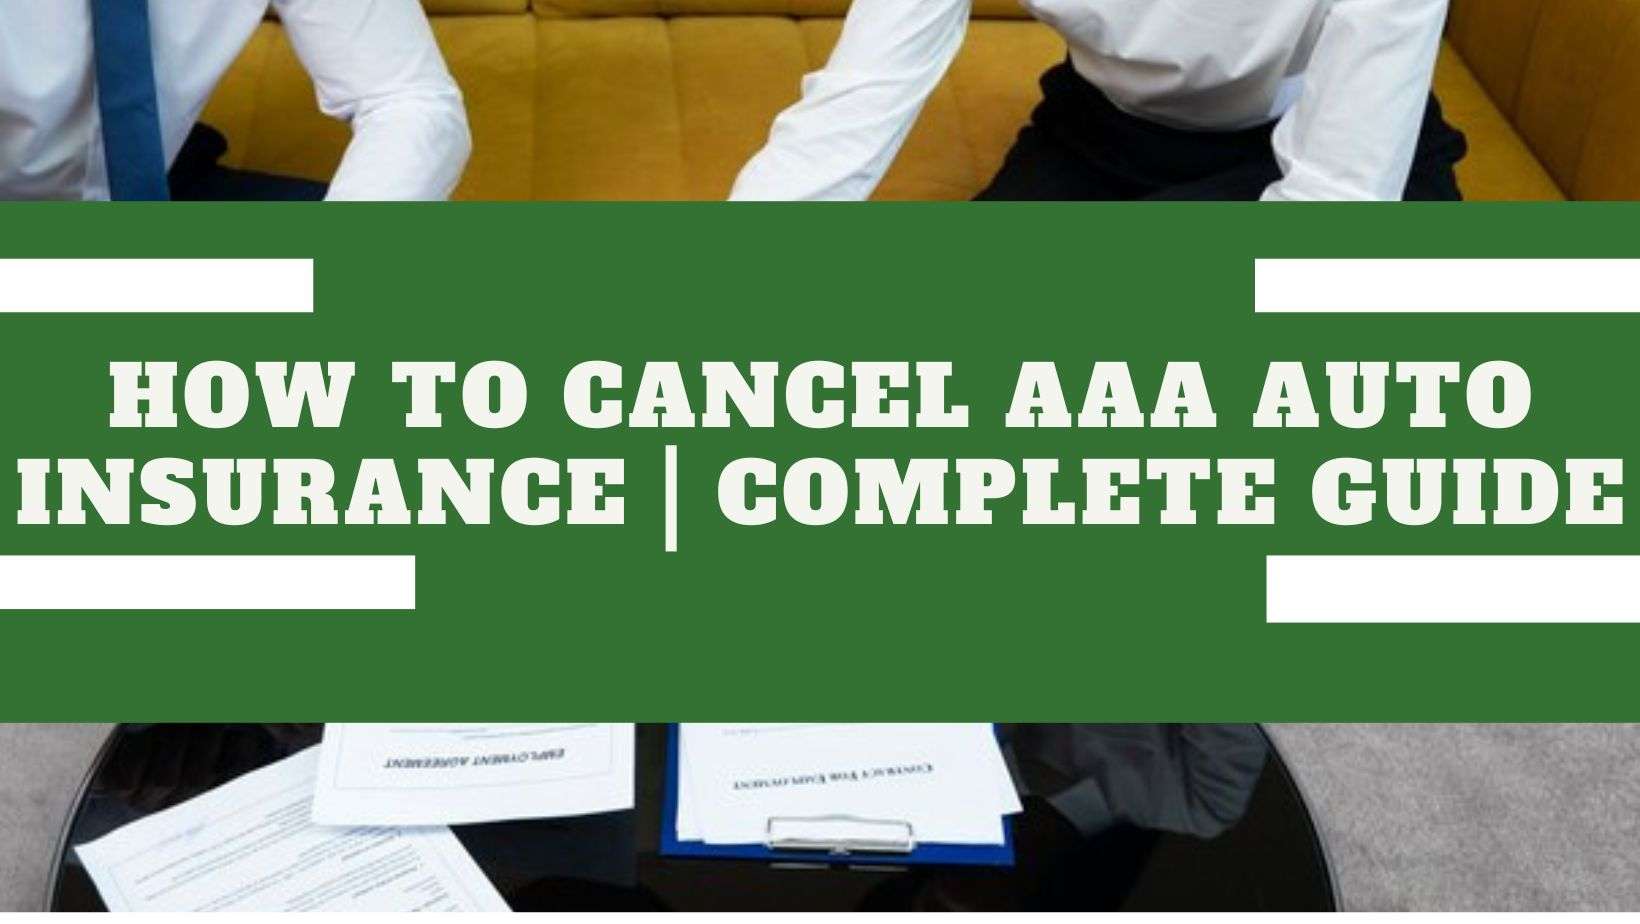 How-to-cancel-aaa-auto-insurance